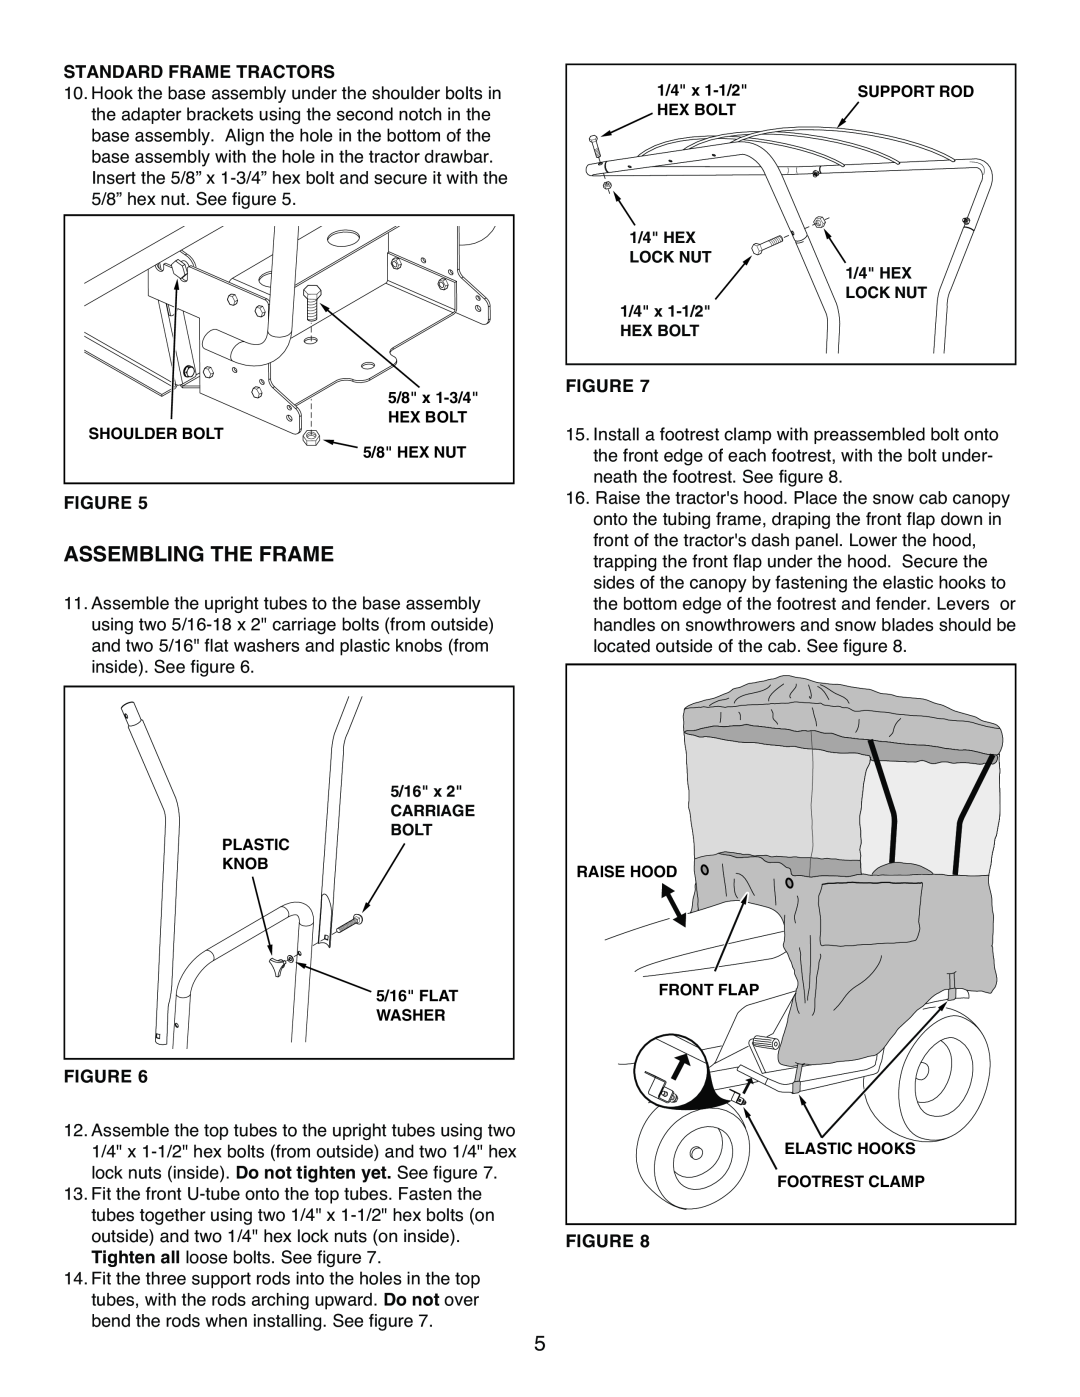 Bolens 190-751-OEM manual Assembling The Frame, Standard Frame Tractors, Figure 